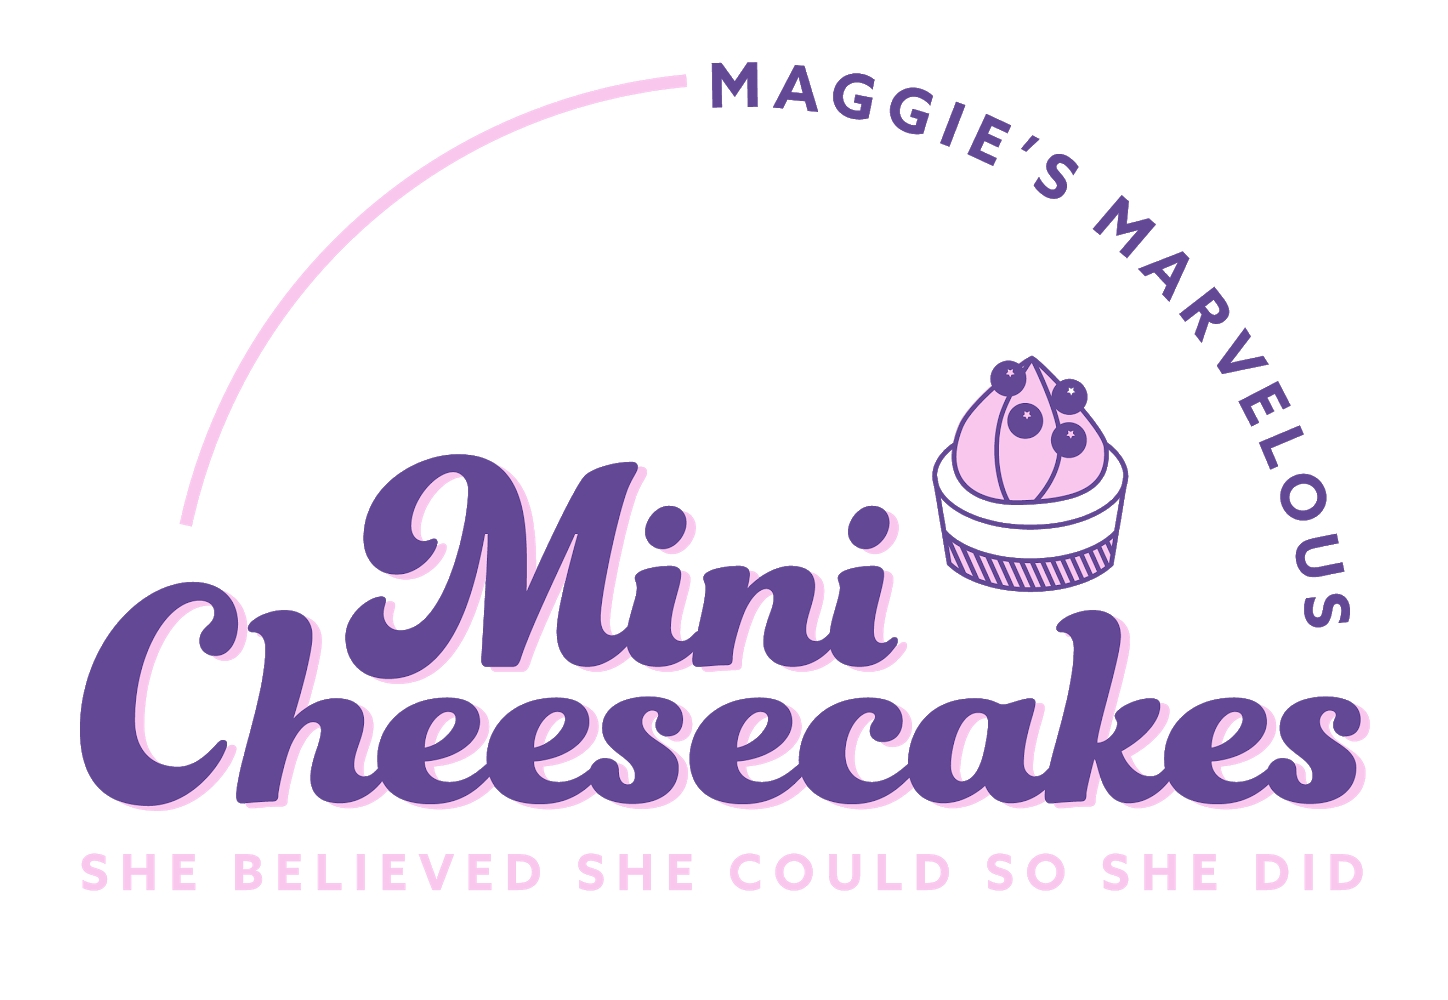 Maggie's Marvelous Mini-Cheesecakes